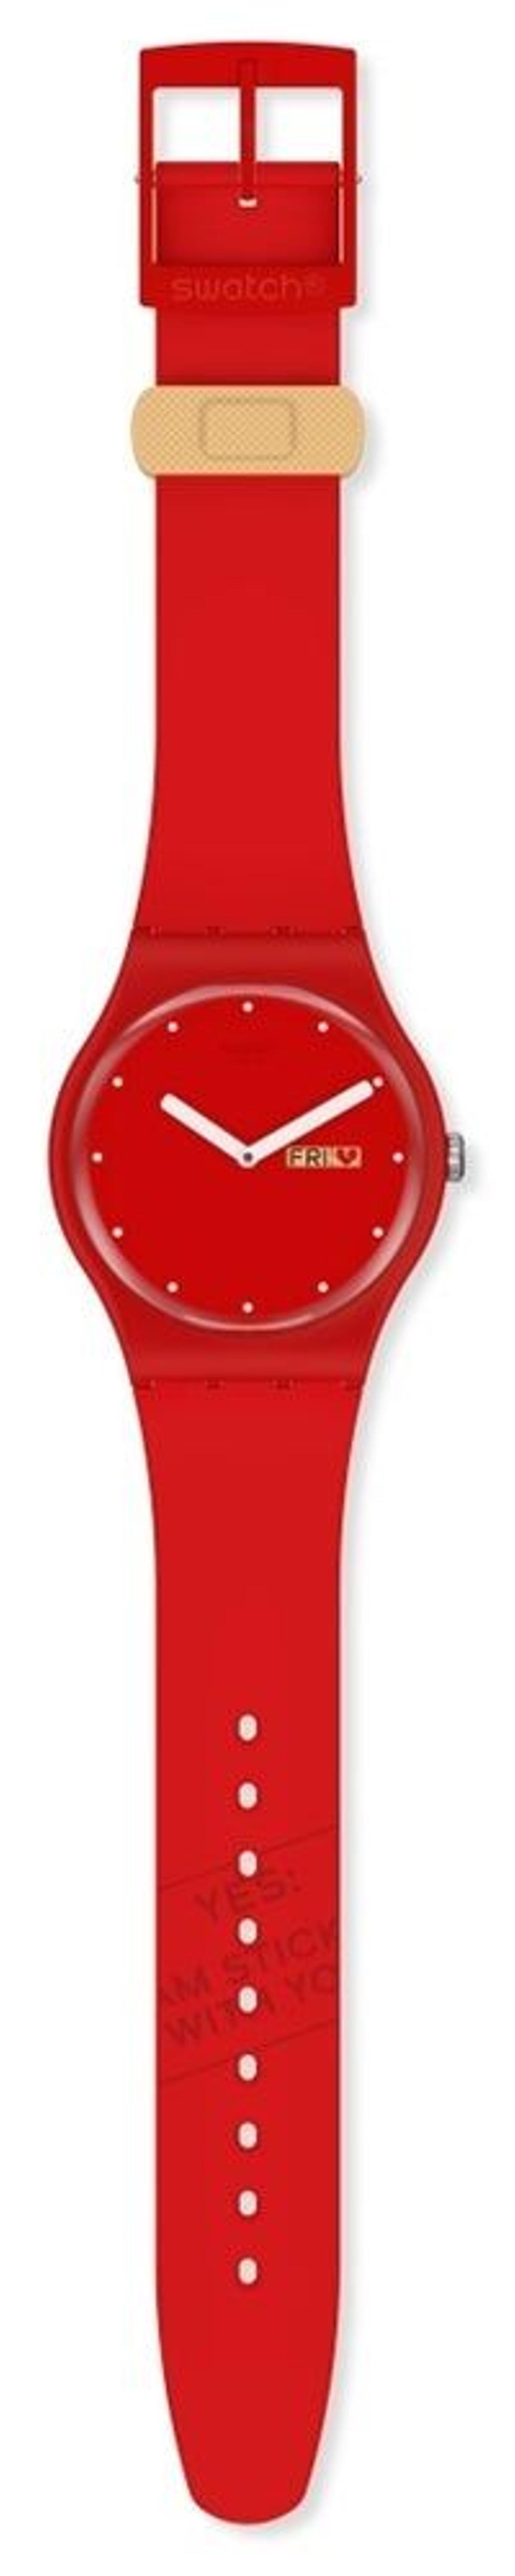 Reloj San Valentín de Swatch (Precio: 95 euros)